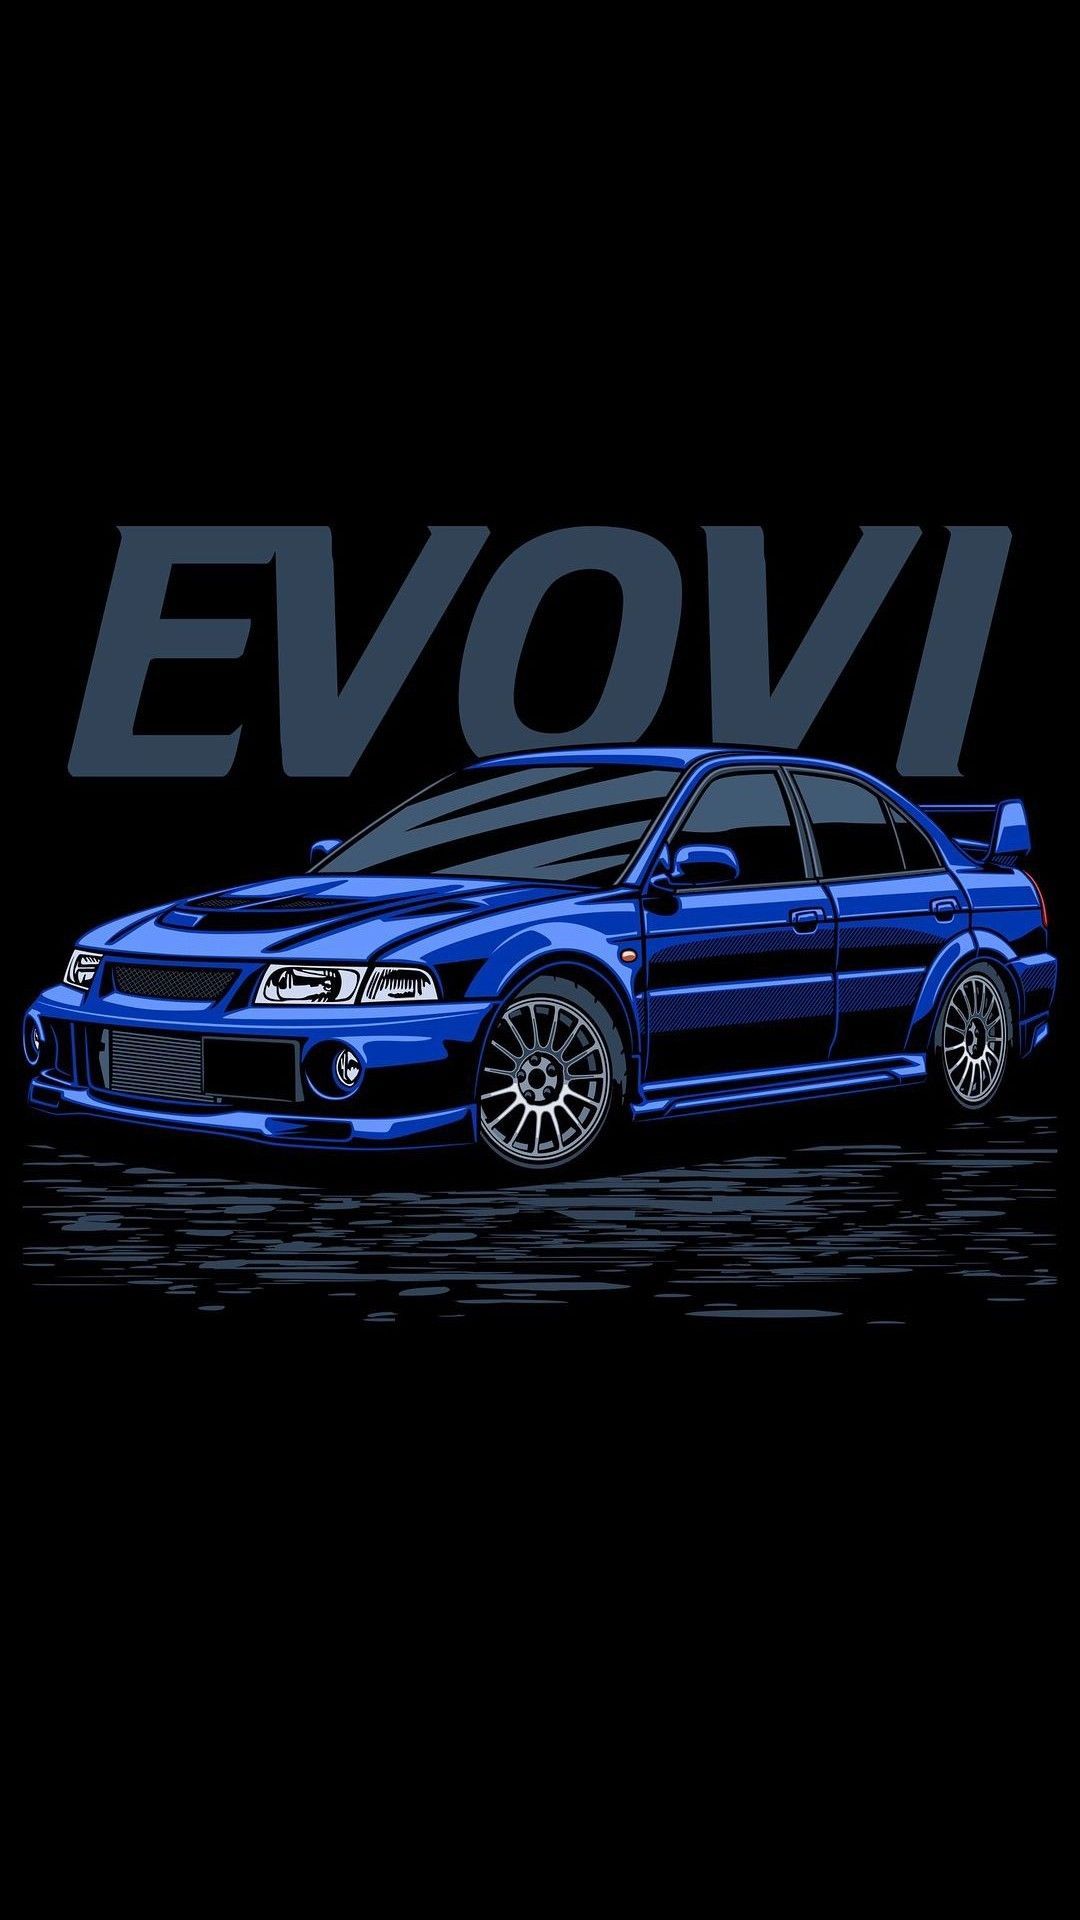 Evo VI Poster #Mitsubishi #Lancer # EvoVI #ralliart. Mobil konsep, Mobil modifikasi, Mobil